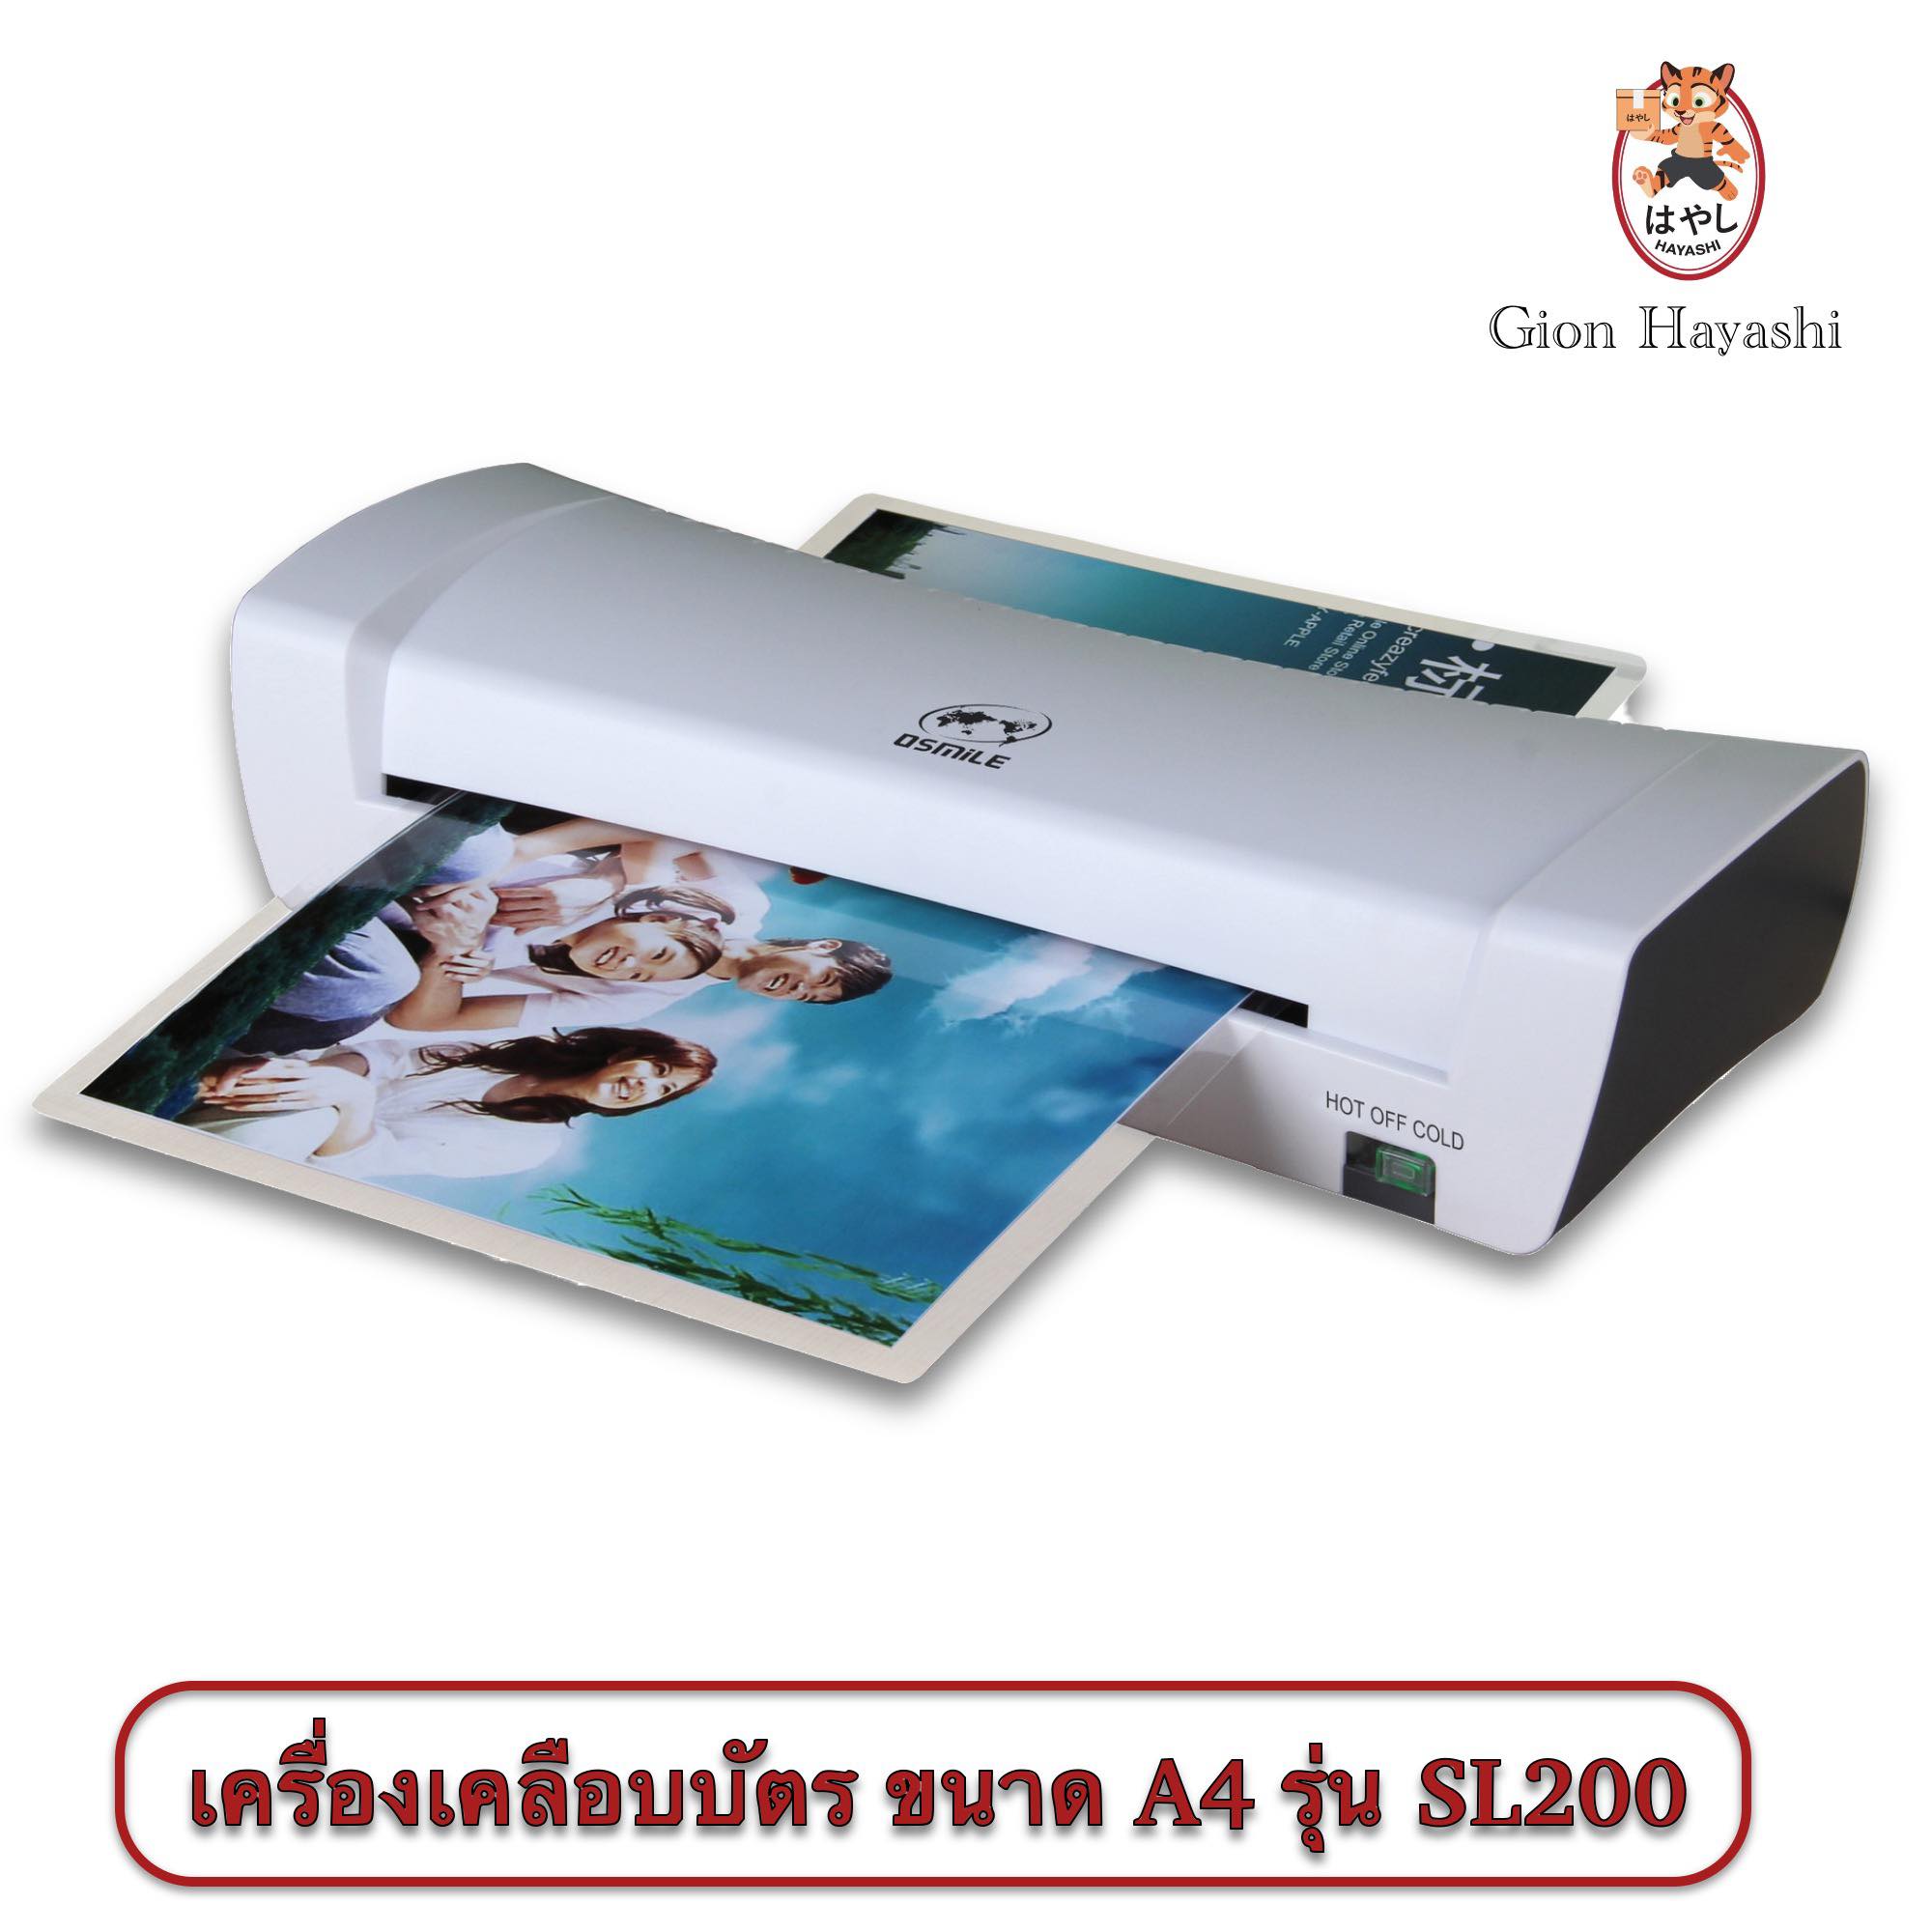 [ Model : SL200 ] Gion - เครื่องเคลือบบัตร A4 เครื่องเคลือบกระดาษ เอกสาร Laminating สามารถเคลือบกระดาษได้สูงสุดขนาด A4